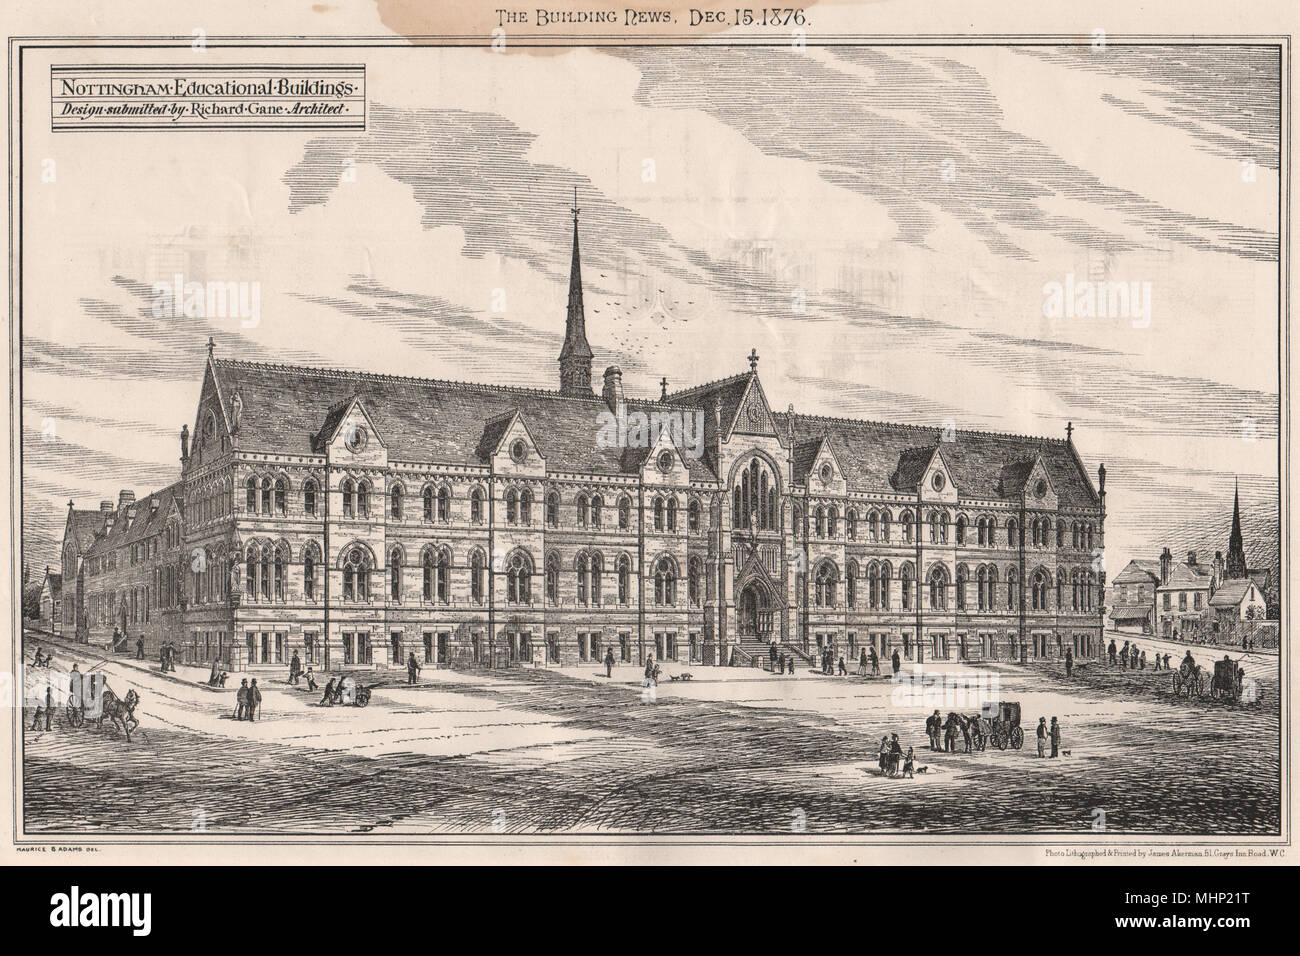 Nottingham edificios educativos; diseño presentado por Richard Gane Archt 1876 Foto de stock